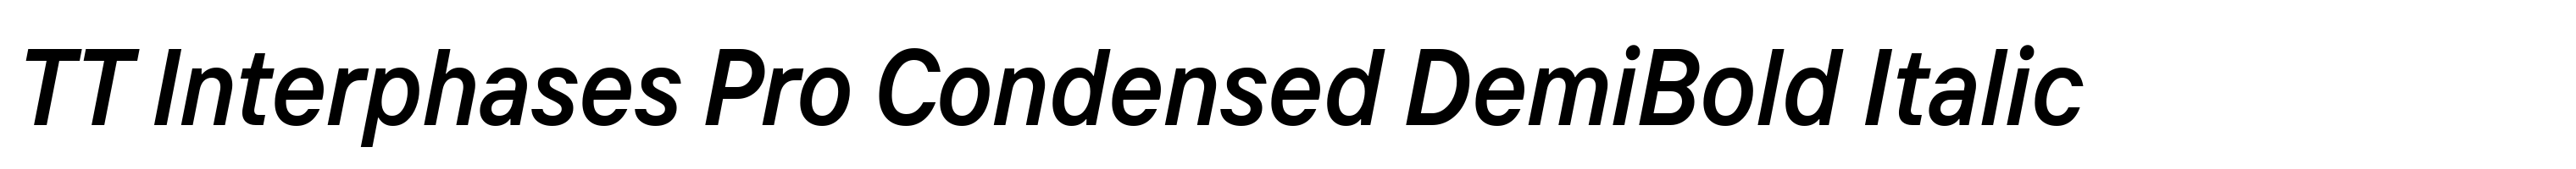 TT Interphases Pro Condensed DemiBold Italic